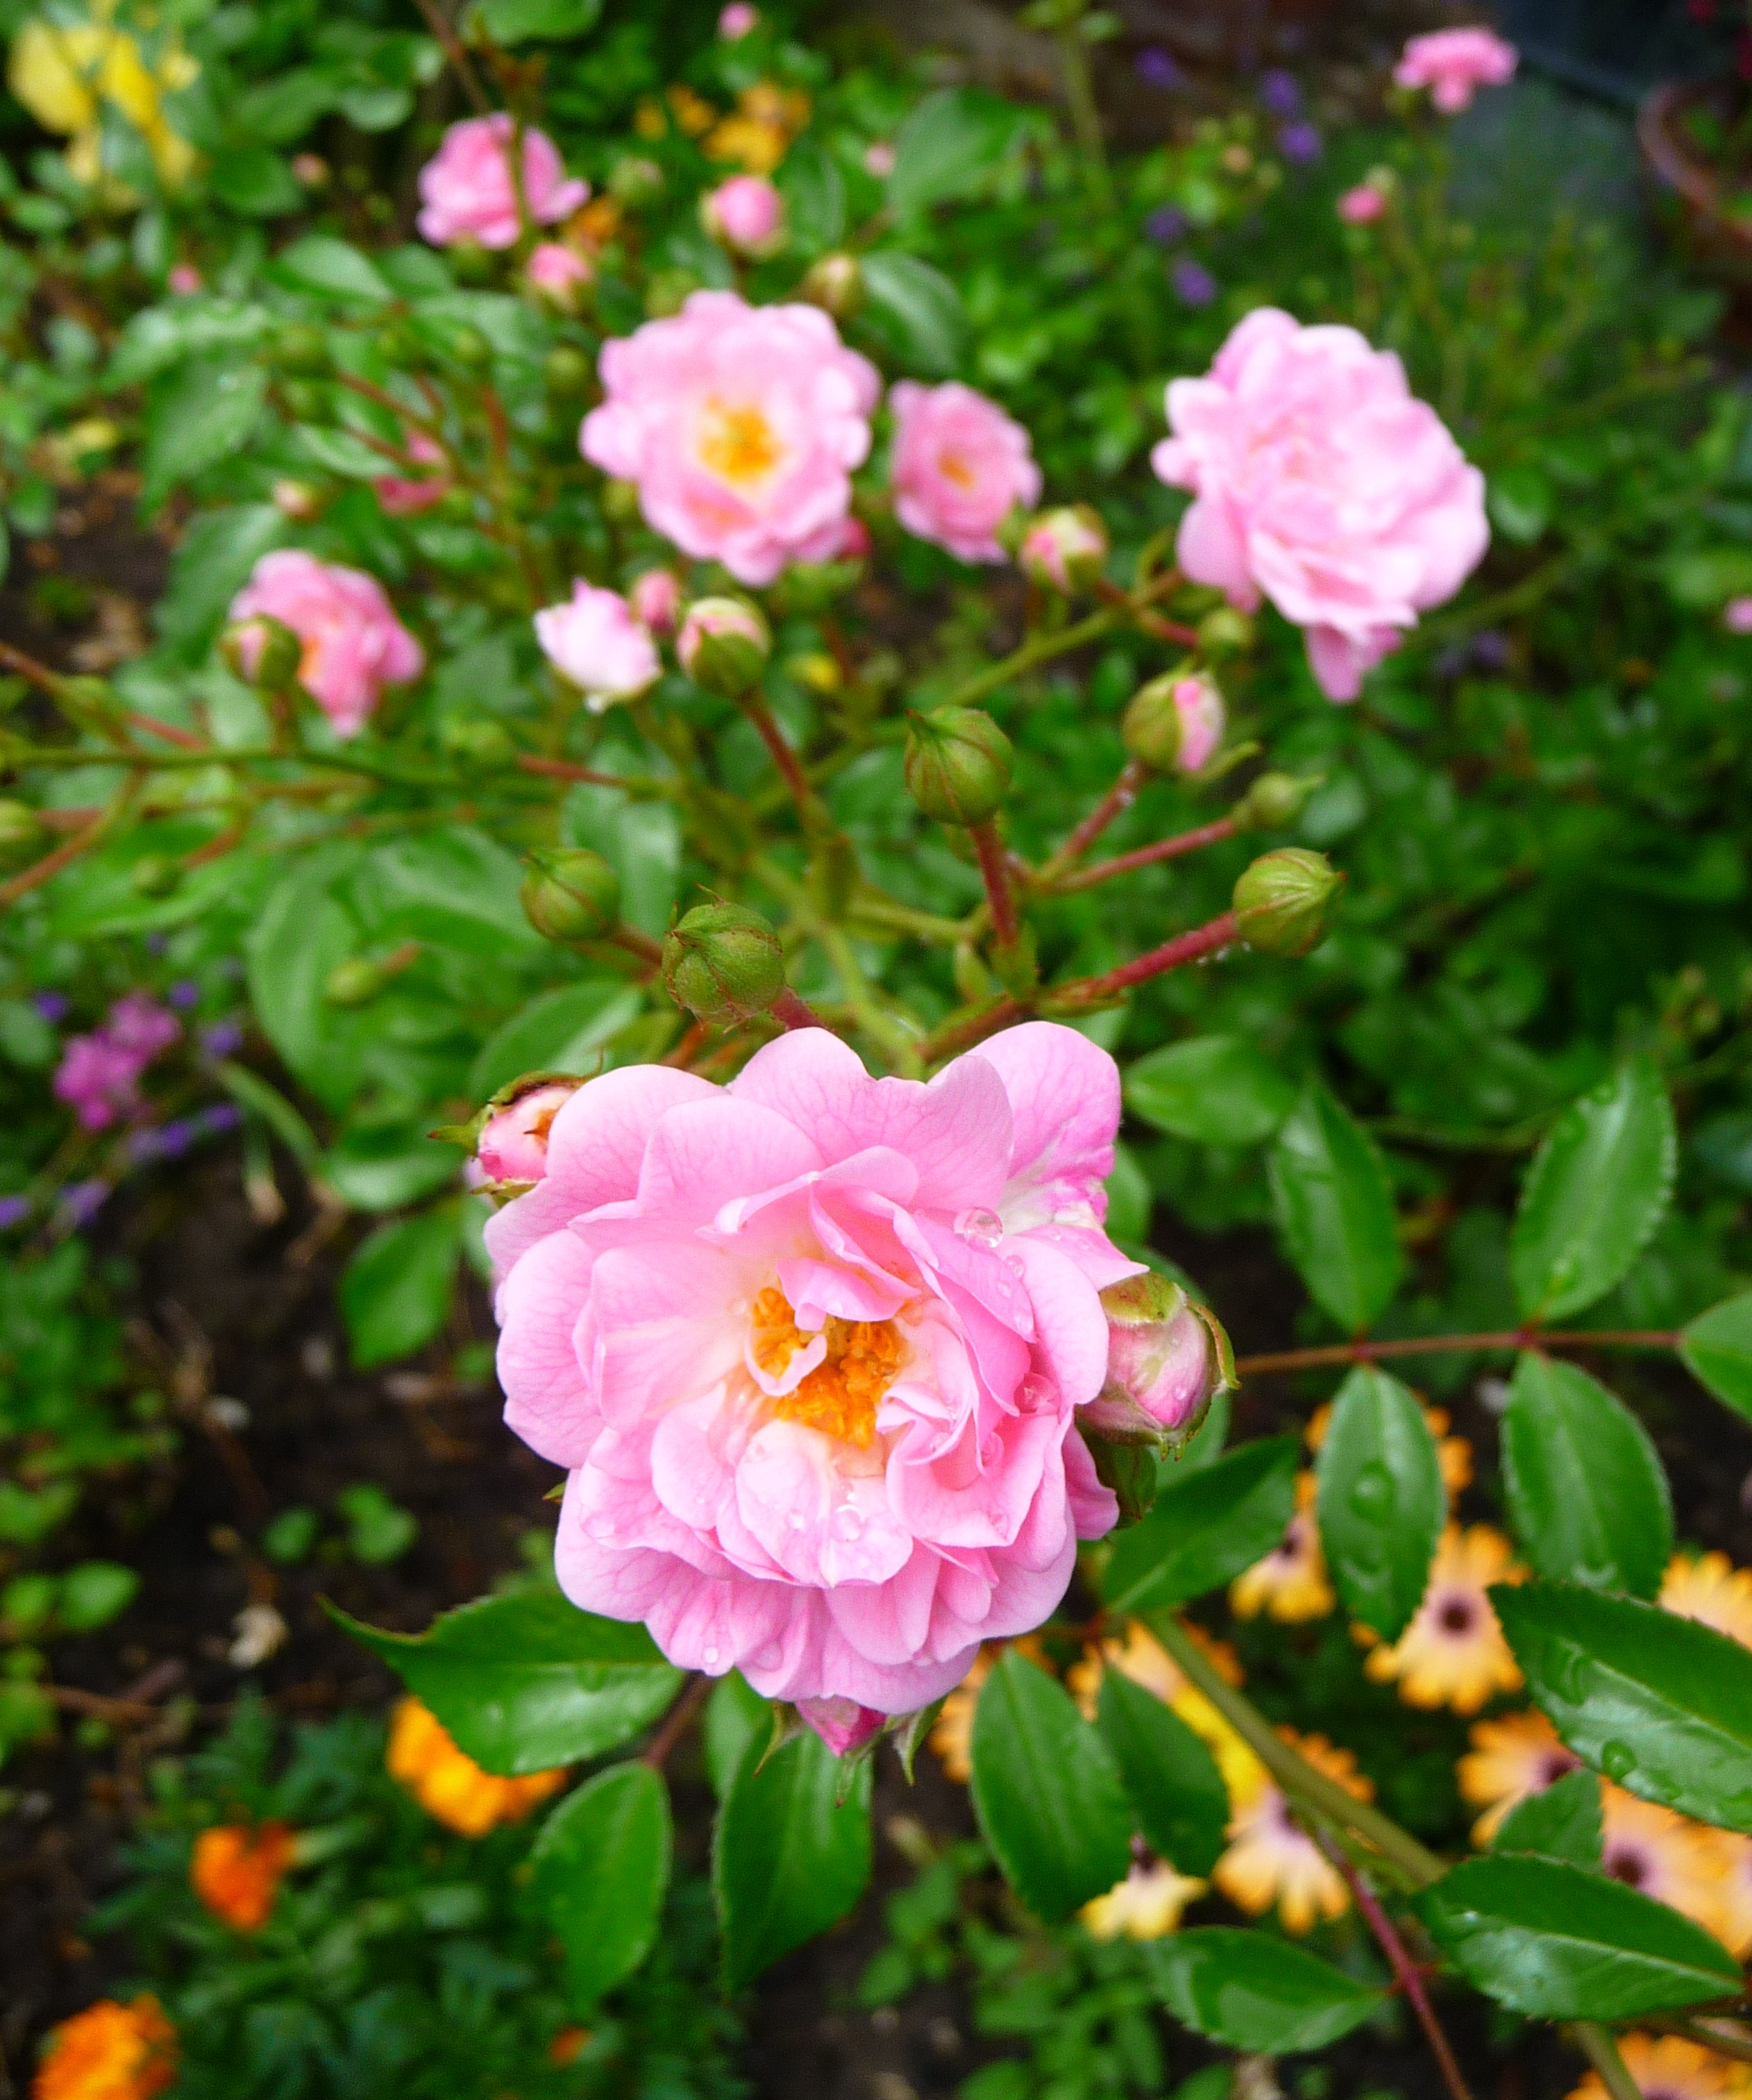 File:The Fairy Rosa.JPG - Wikimedia Commons